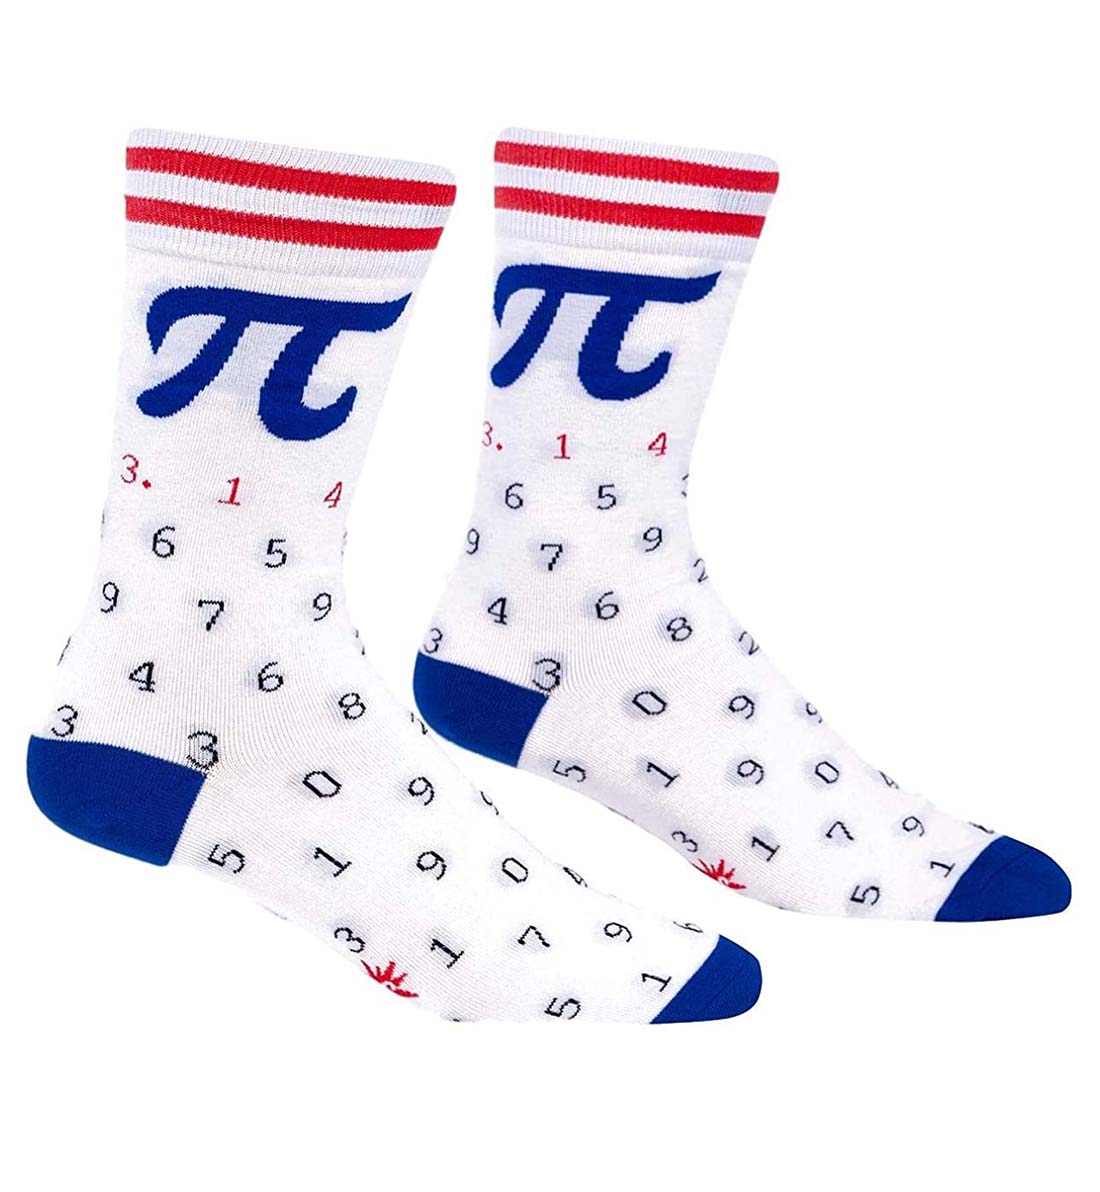 SOCK it to me Men's Crew Socks (mef0462),American Pi - American Pi,One Size